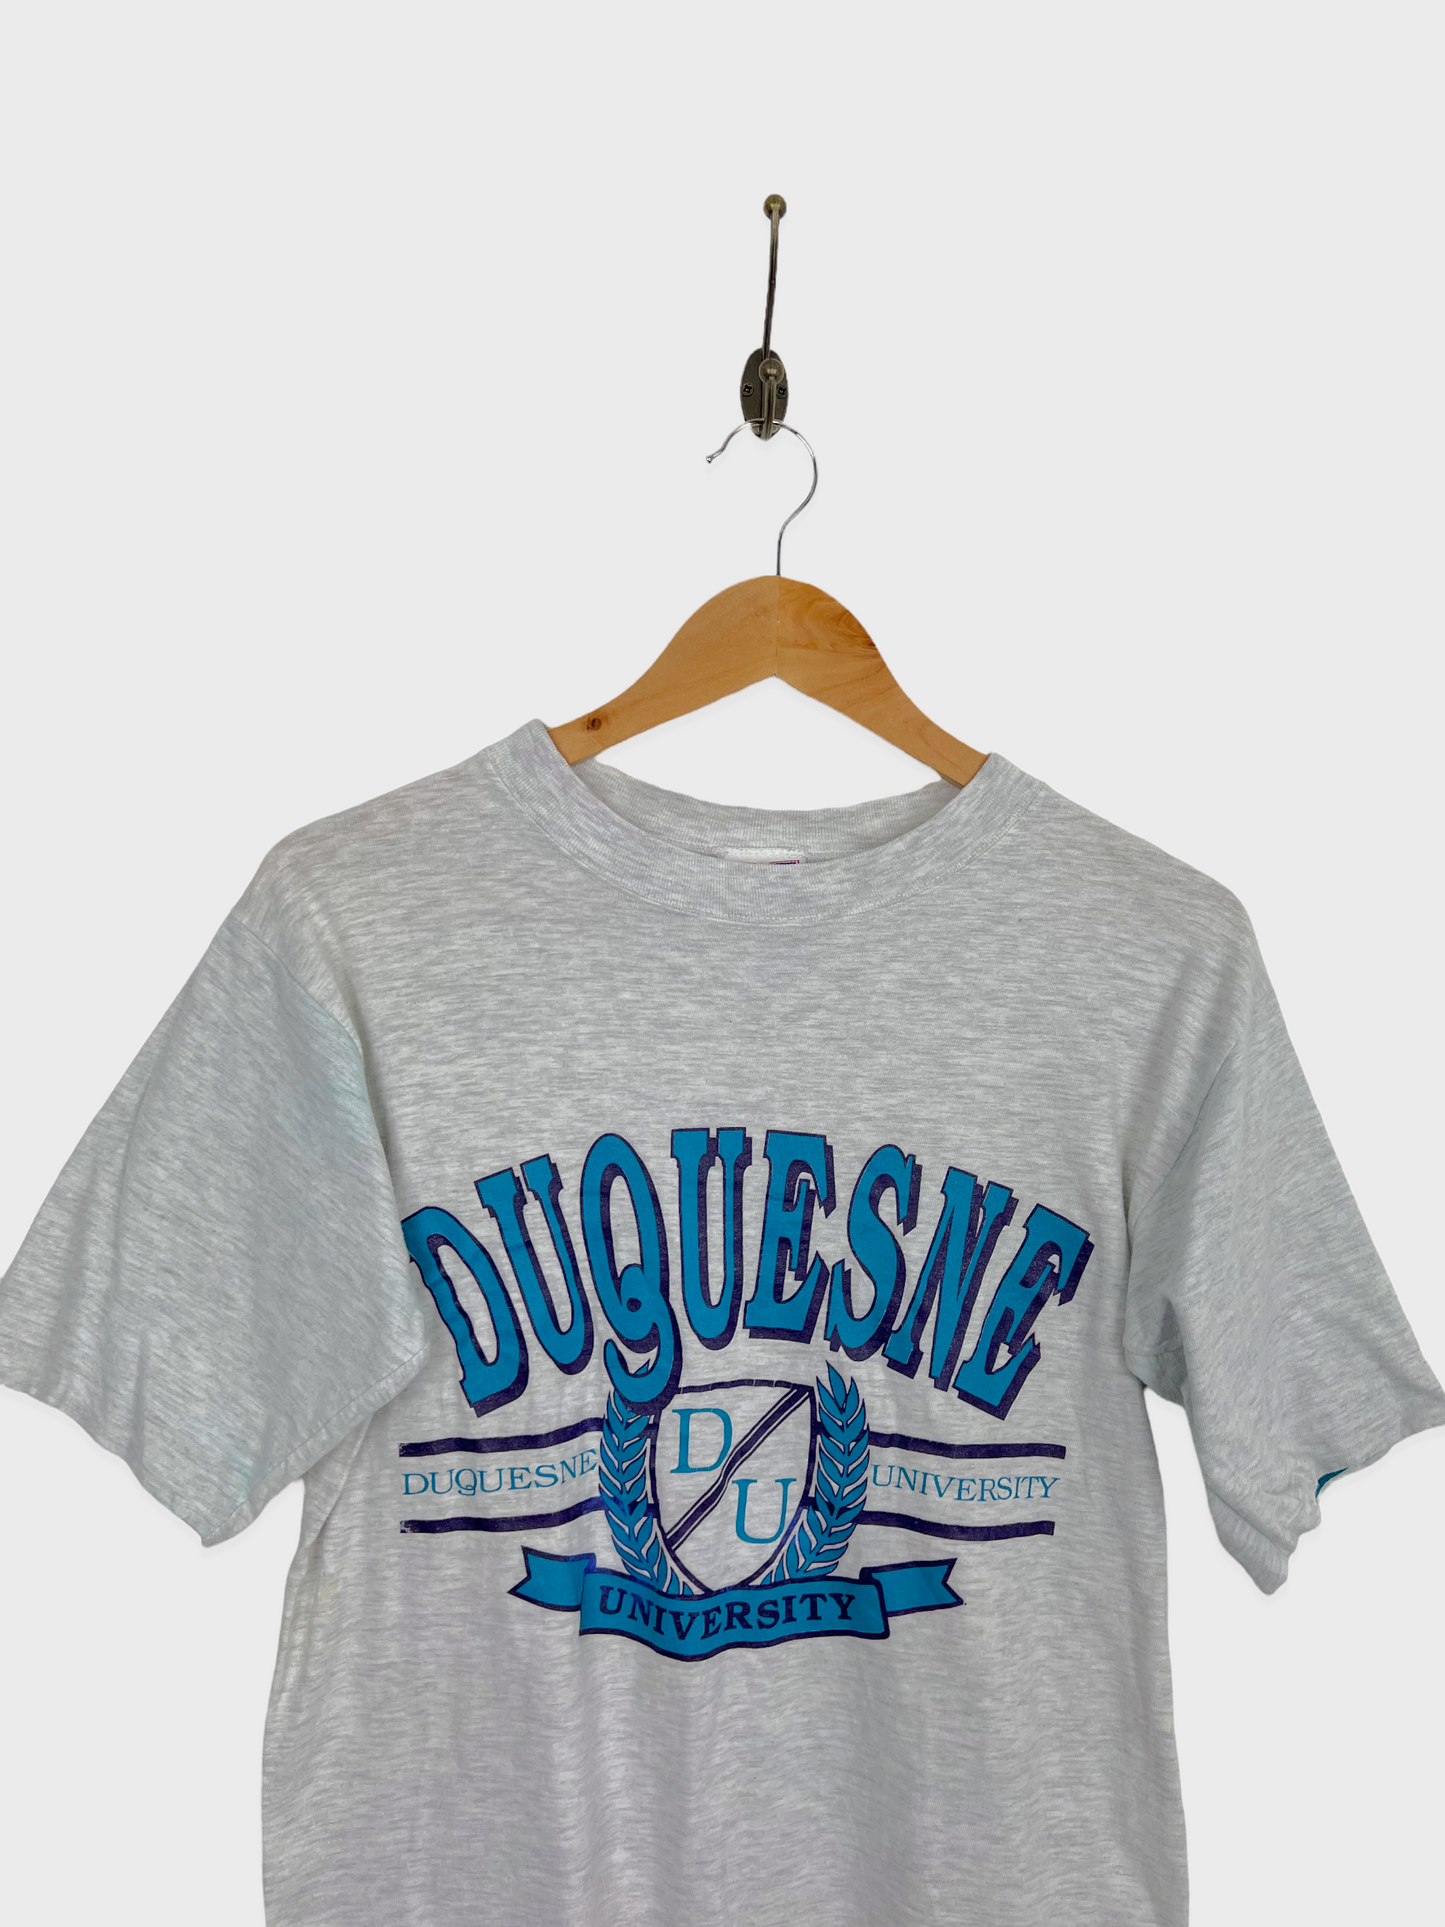 90's Duquesne University USA Made Vintage T-Shirt Size 8